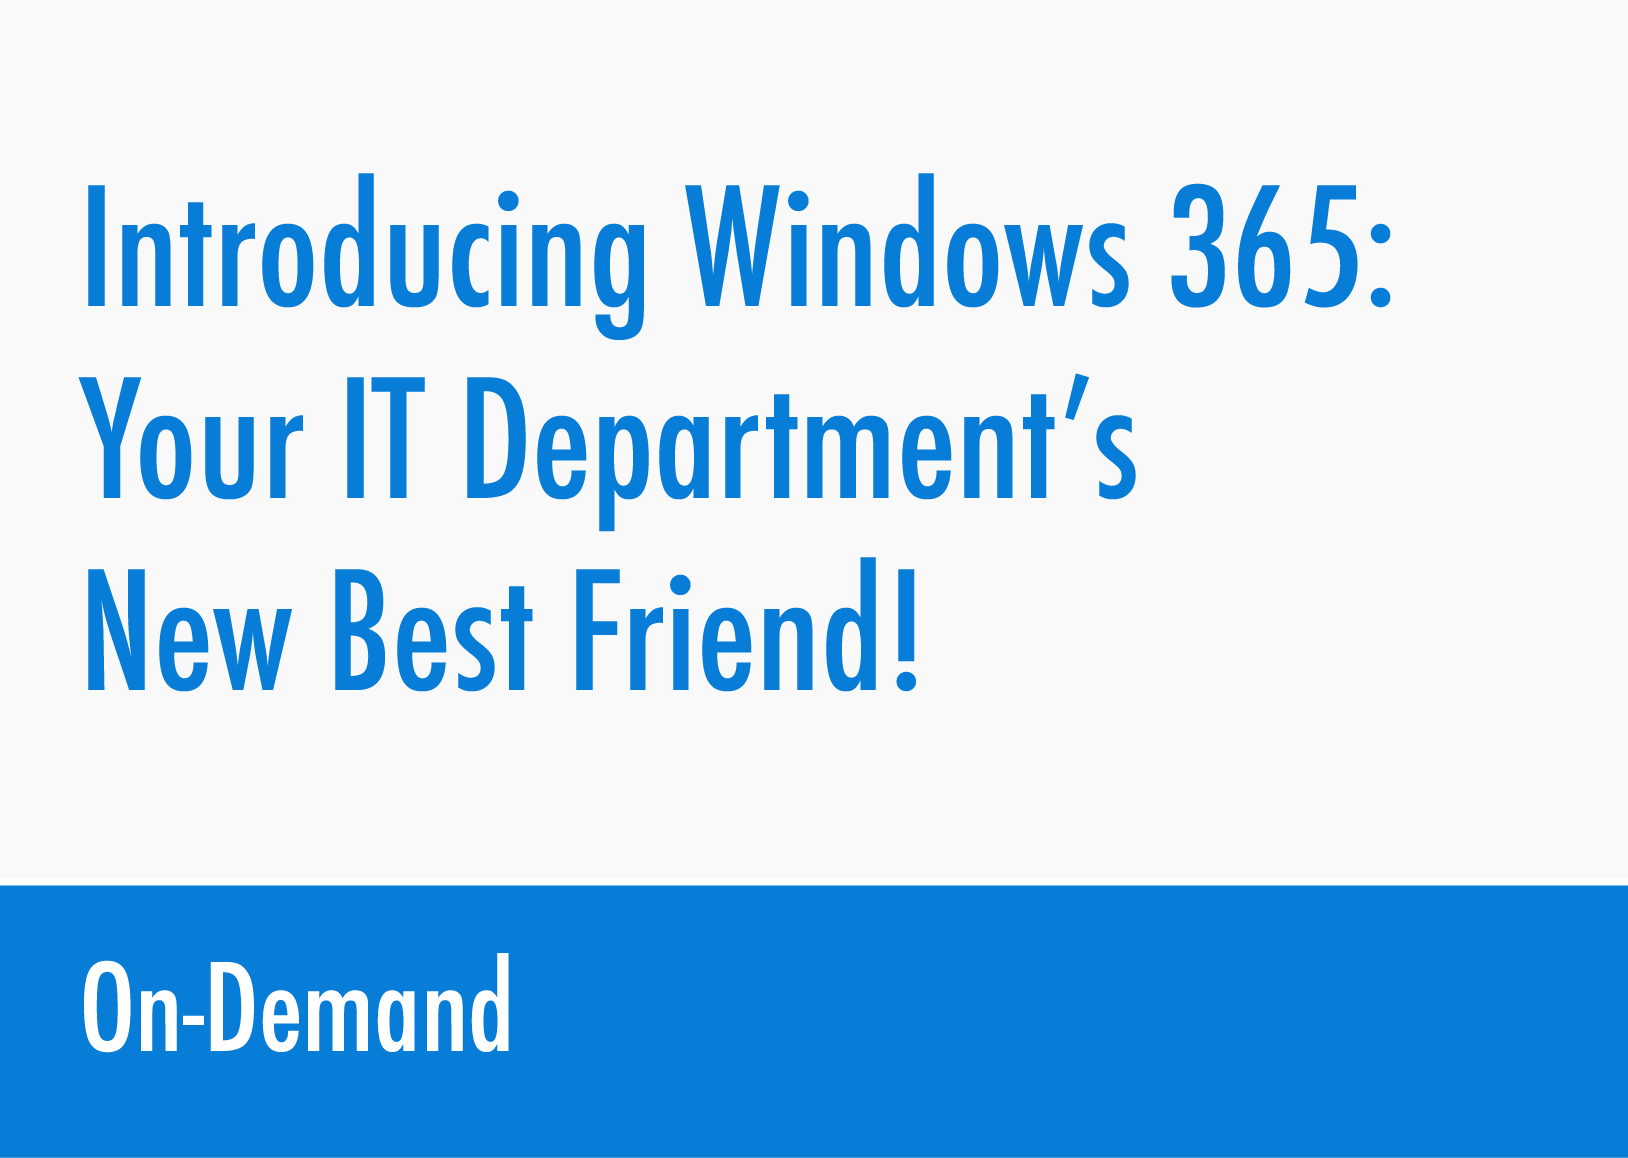 Azure Windows 365 On-demand -06